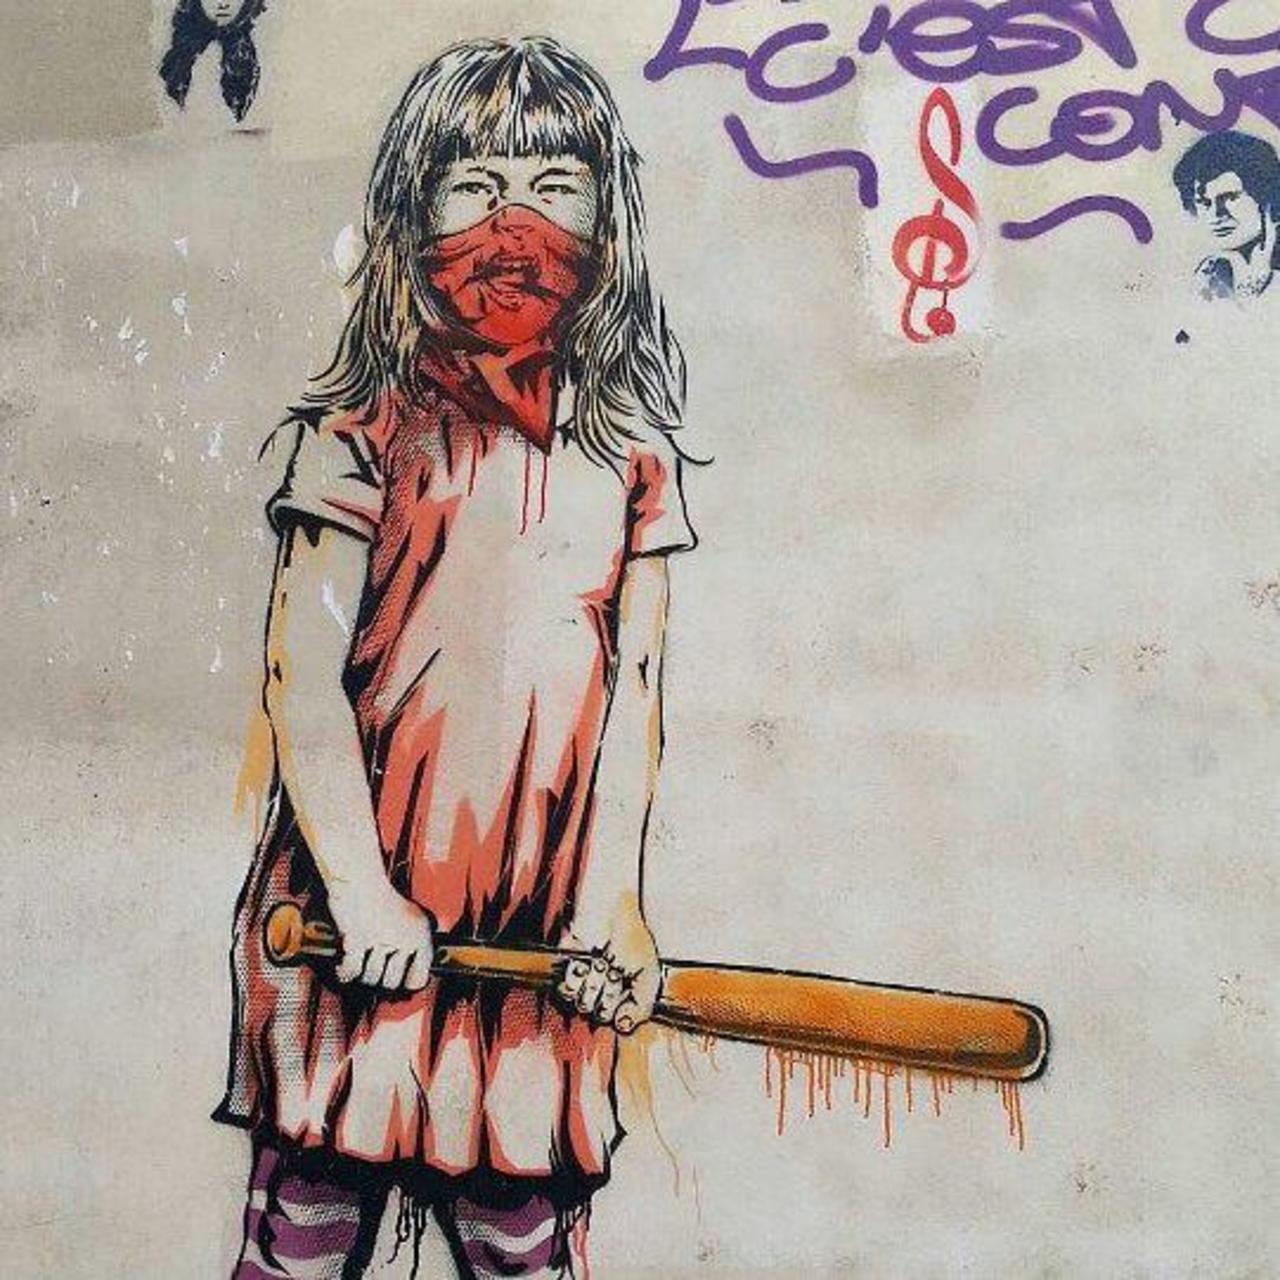 #Paris #graffiti photo by @senyorerre http://ift.tt/1G6E9iU #StreetArt http://t.co/mwZoWfq4hy